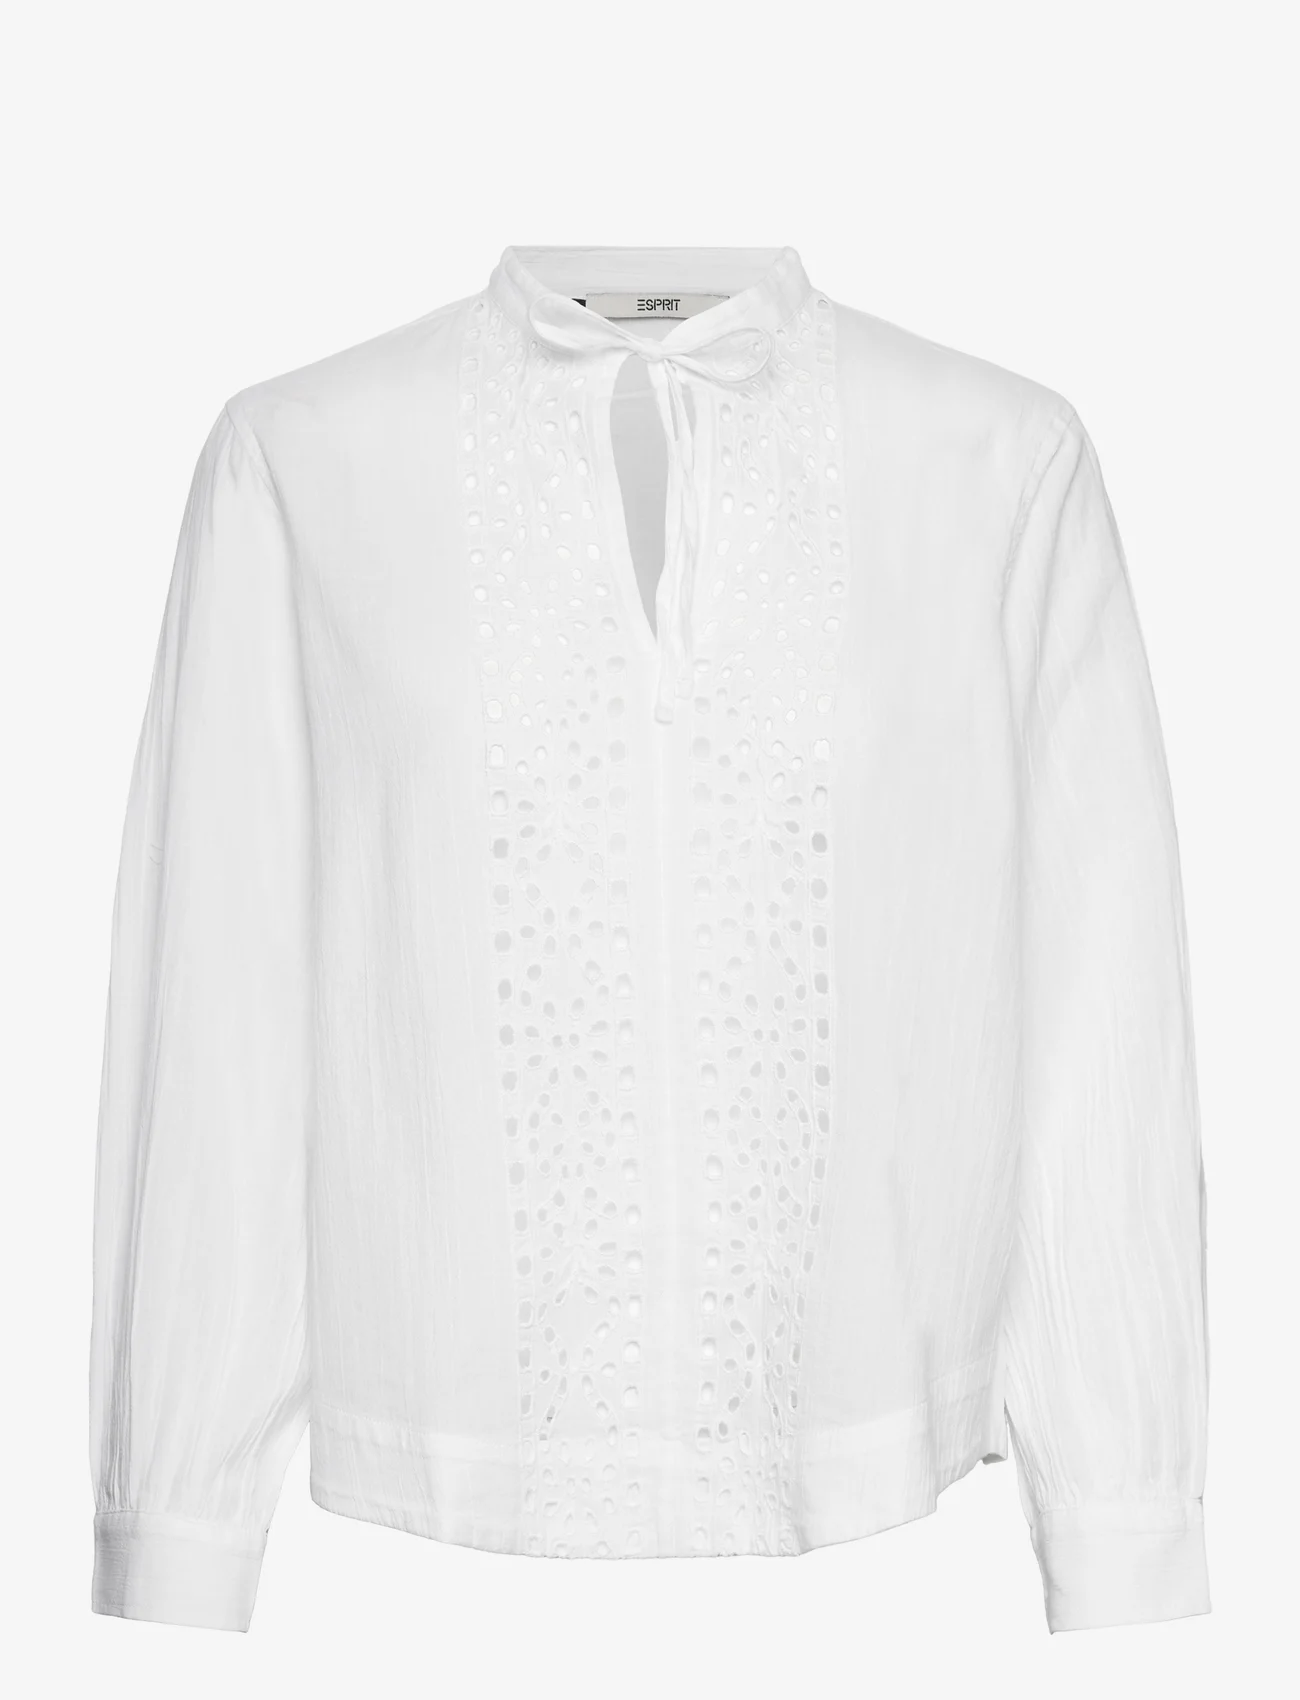 Esprit Casual - Embroidered cotton blouse - blouses à manches longues - white - 0